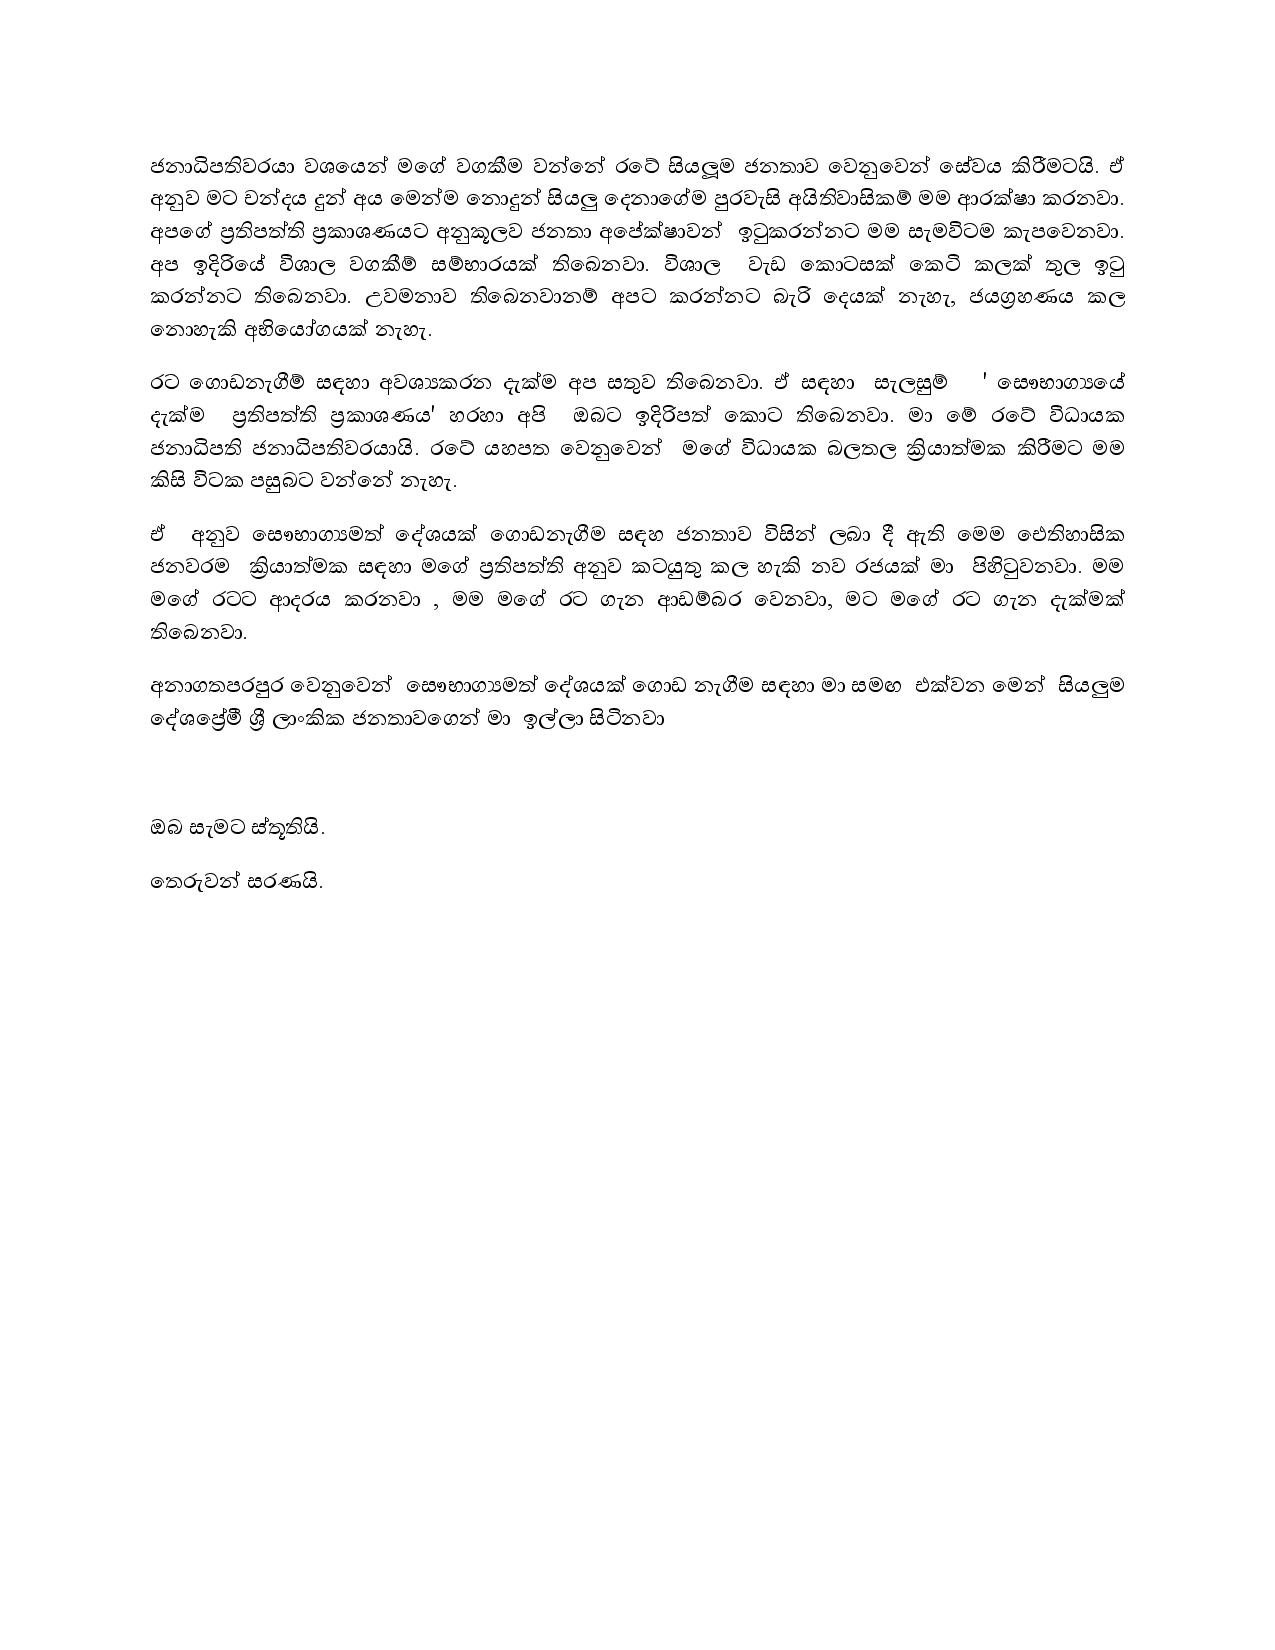 2019.11.18 Speech Made By HE the President Gotabaya Rajapaksa at Ruvanweli Se Pudabima 11 page 004